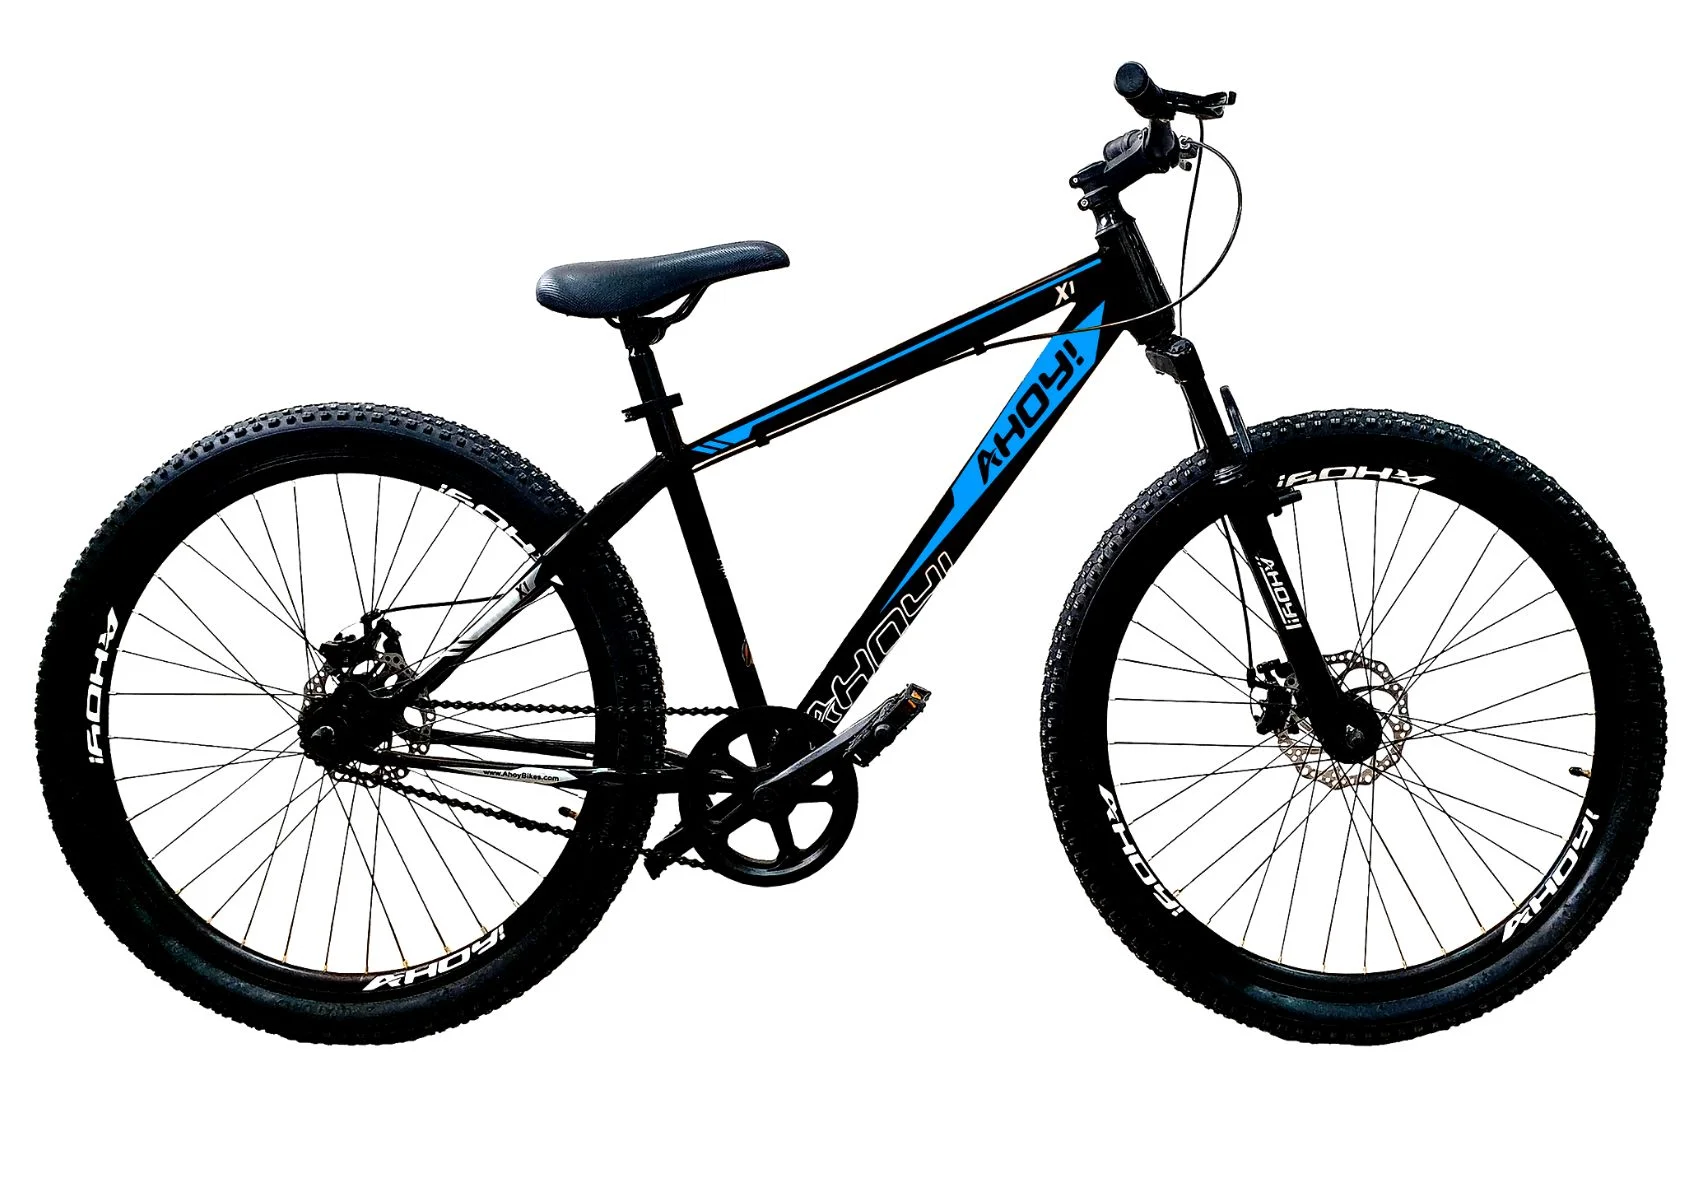 X1 Non Gear Cycle 27.5T | Buy Blue Non Gear Bike for Men